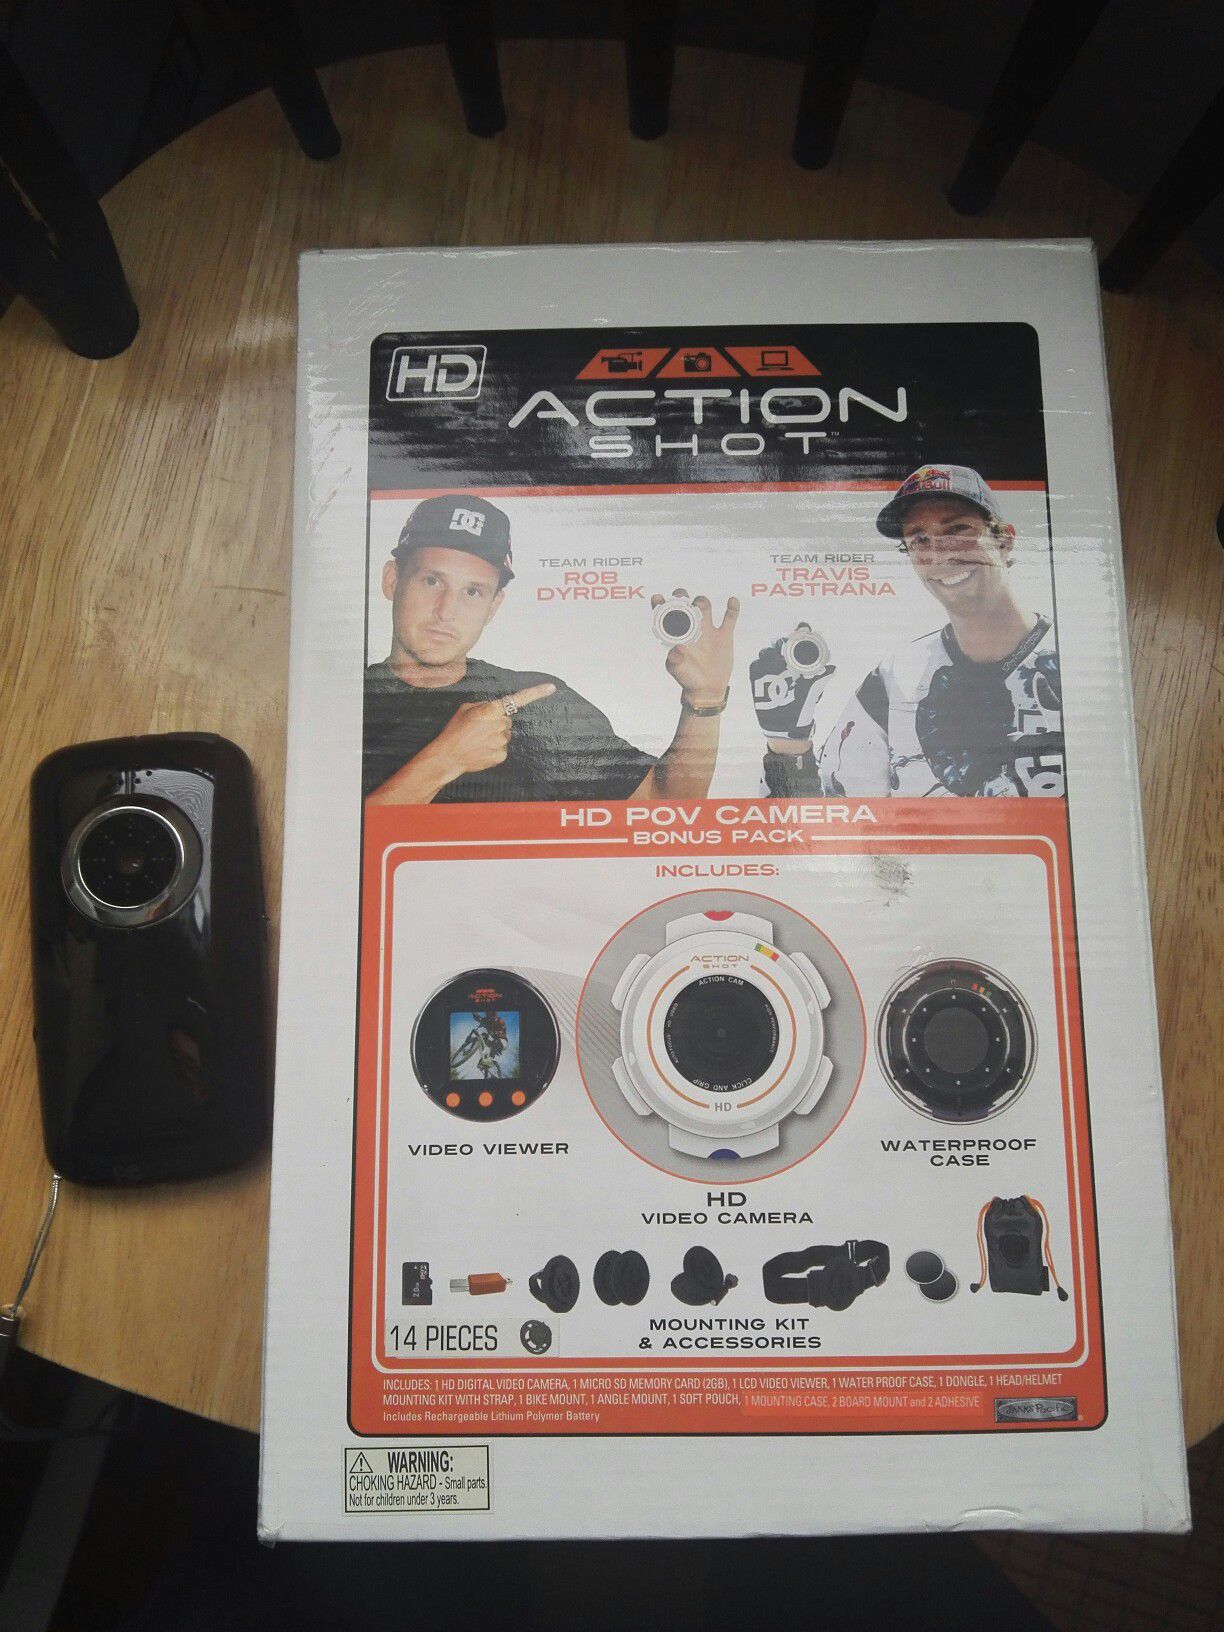 Action spot pov camera hd and digital camcorder